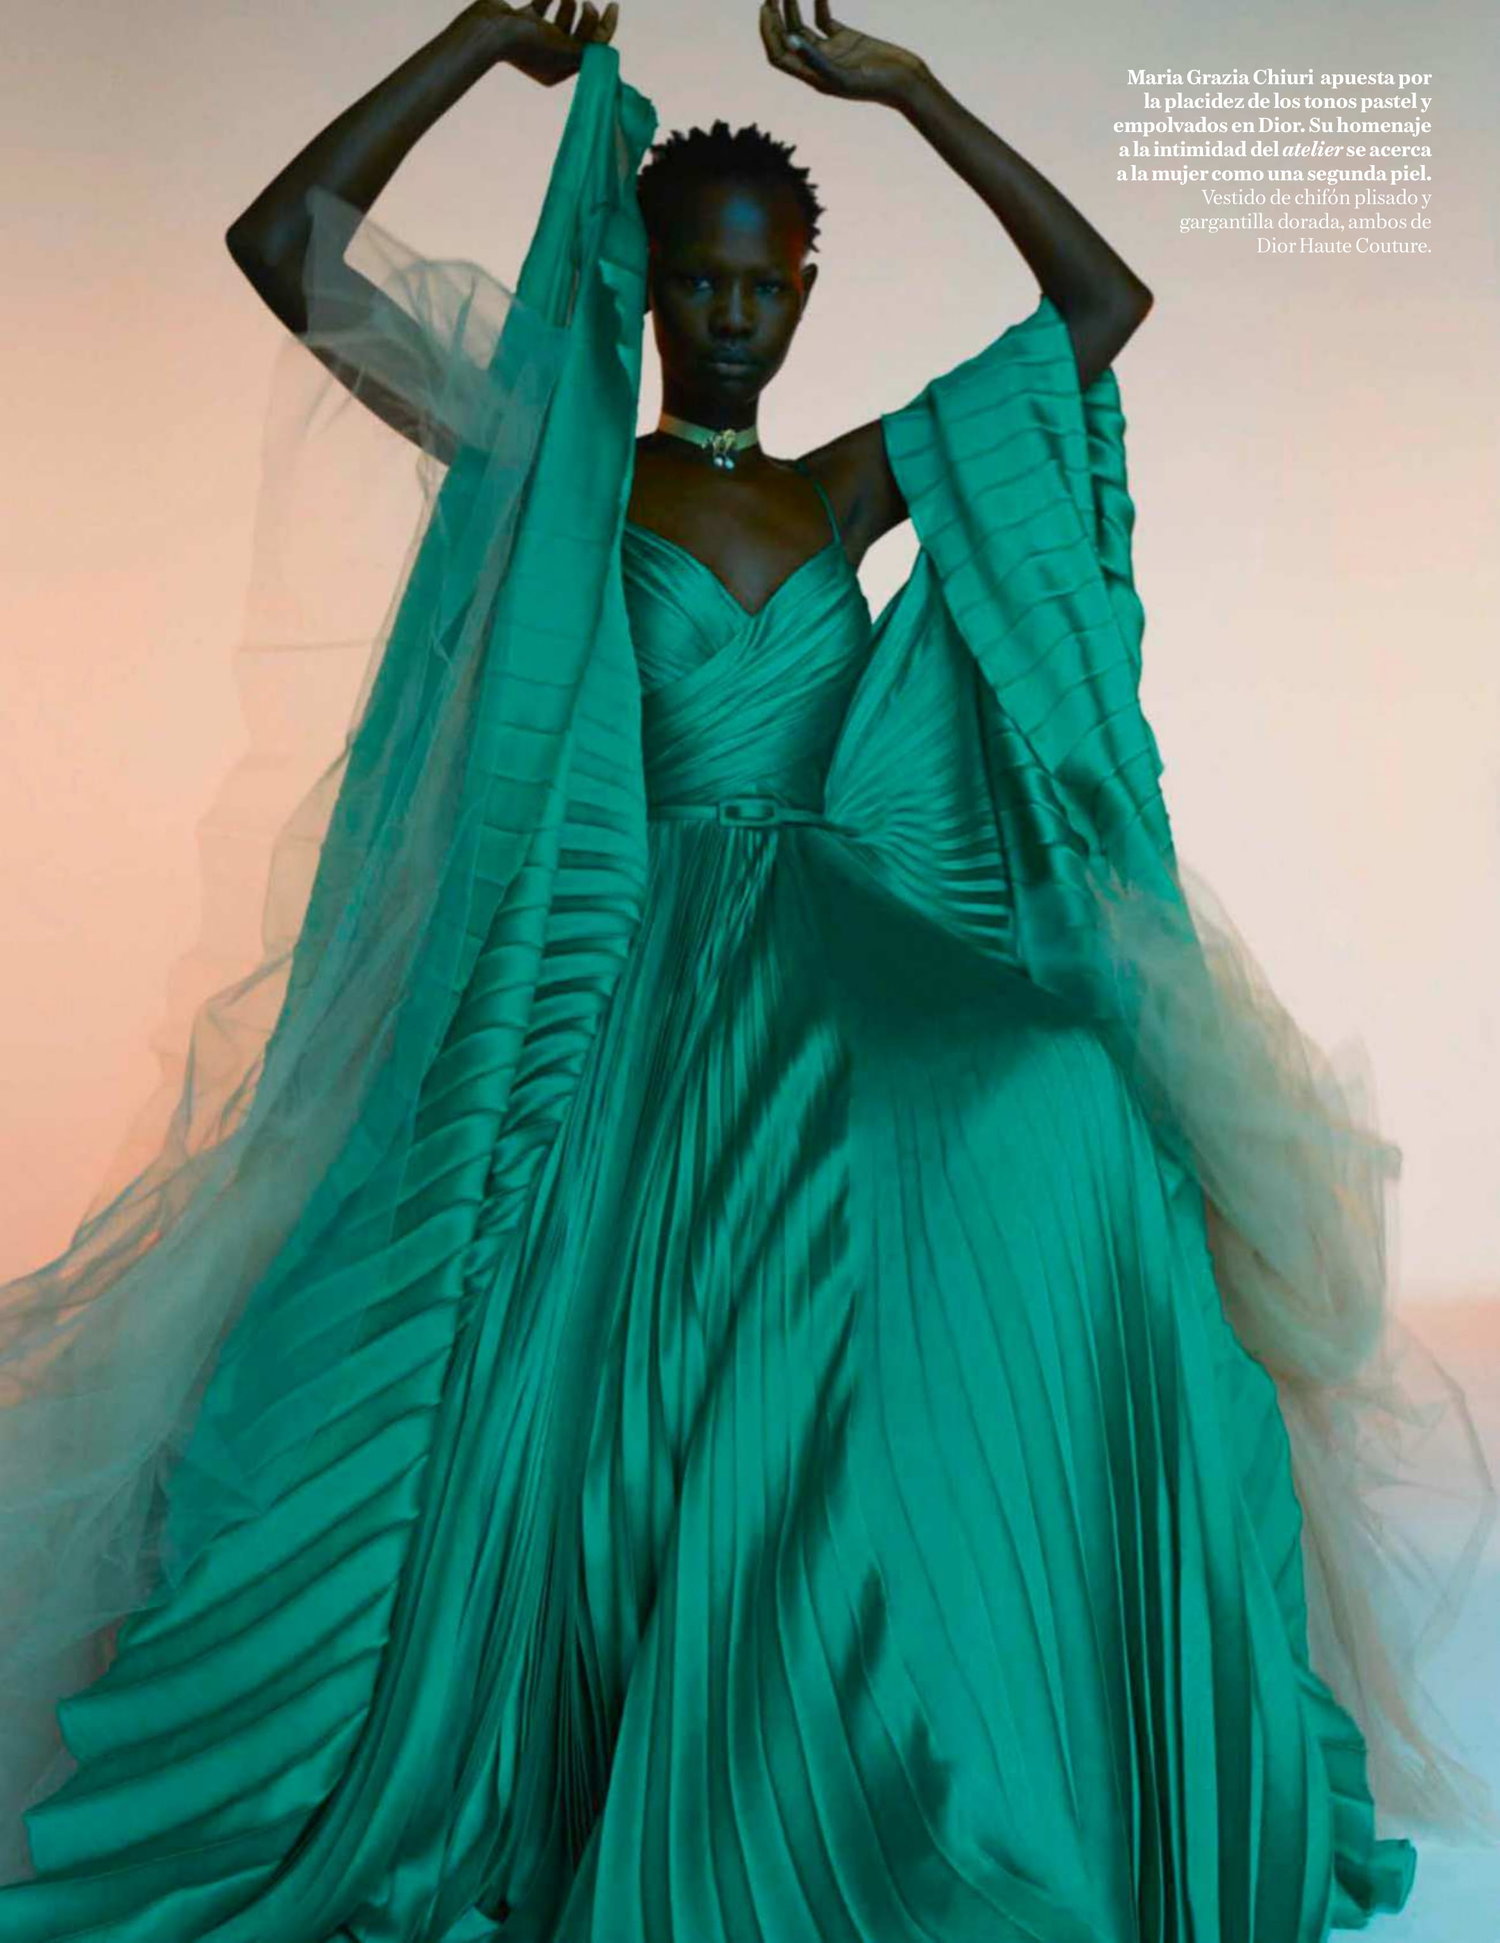 Shanelle Nyasiase Is Green Goddess Elegance By Txema Yeste For Vogue Spain ...